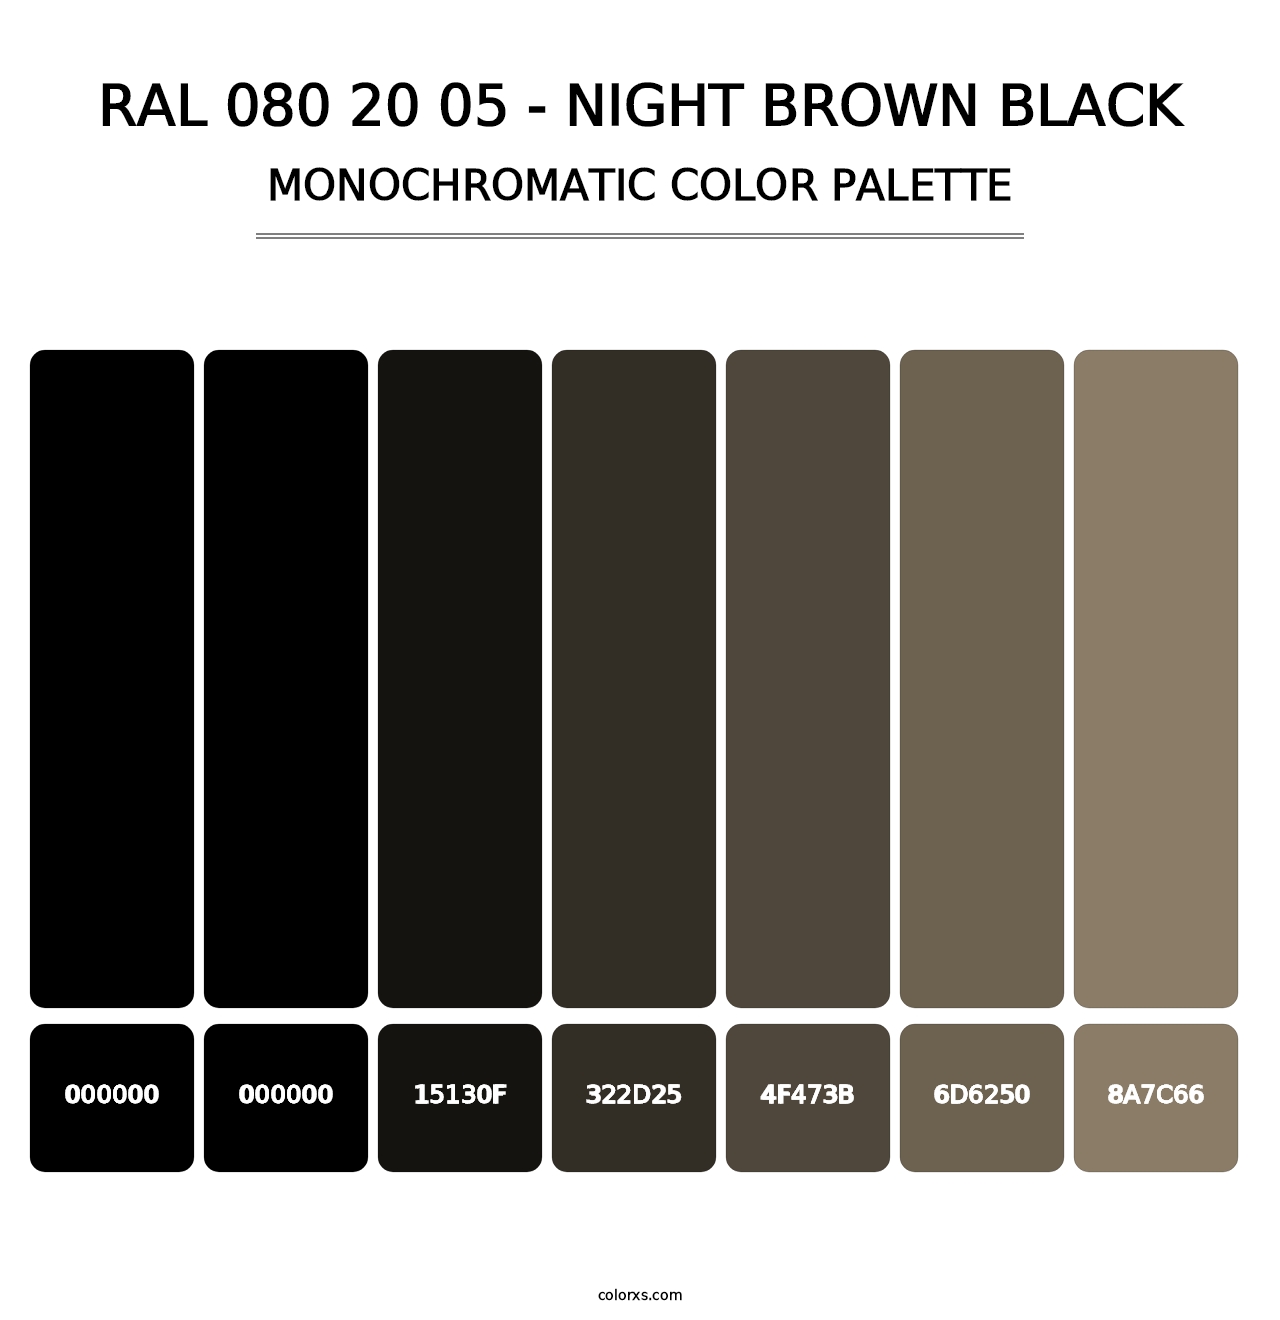 RAL 080 20 05 - Night Brown Black - Monochromatic Color Palette